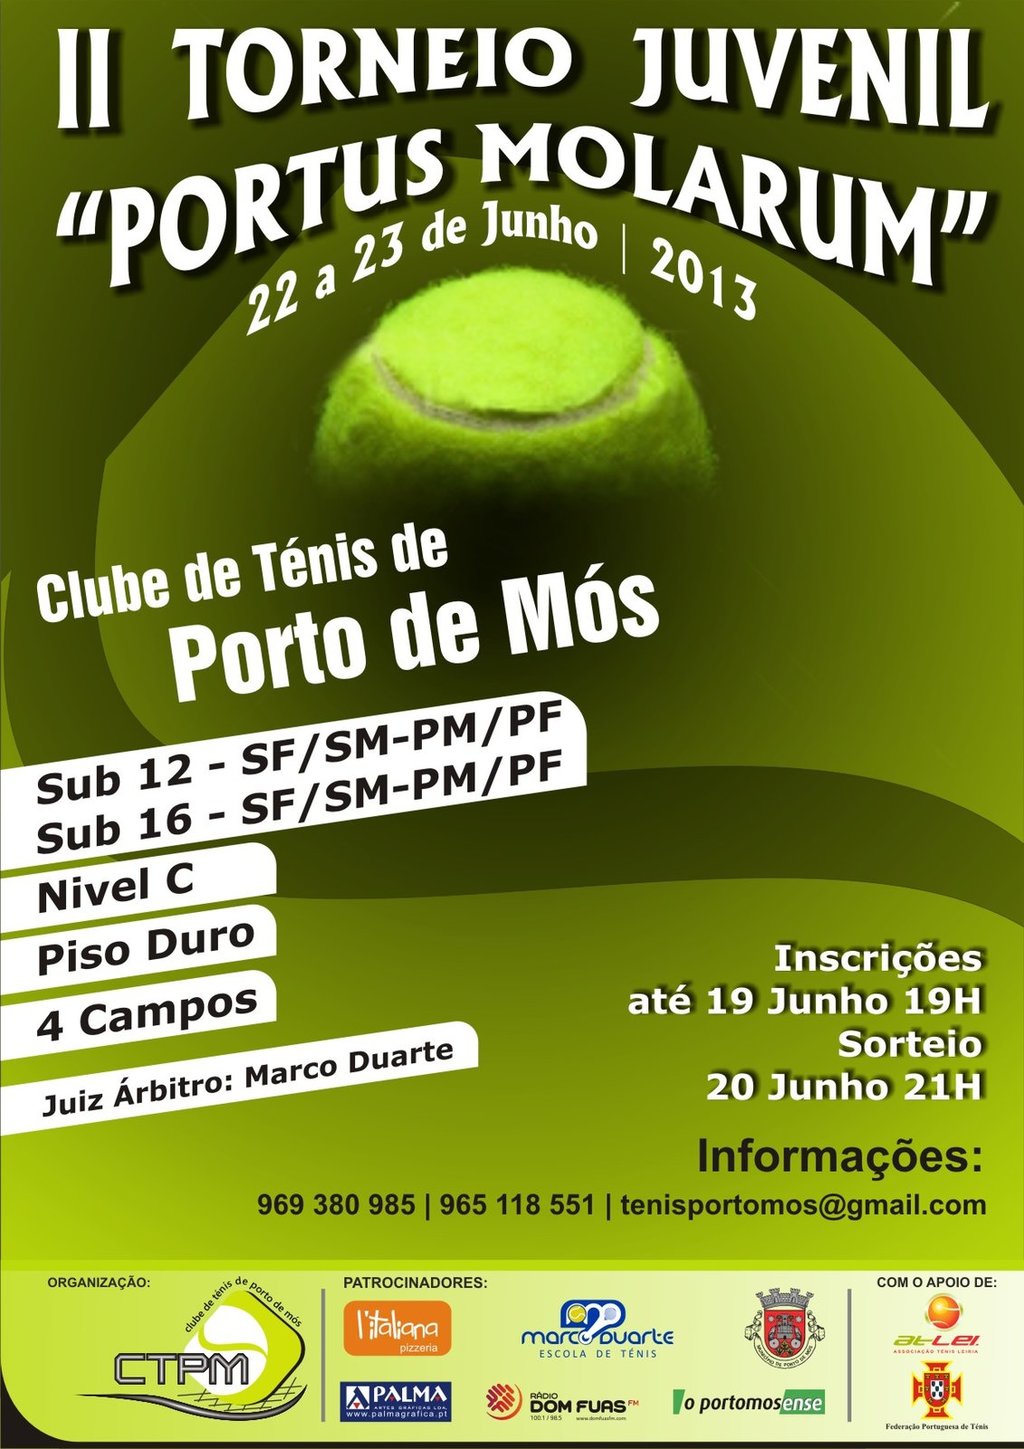 Torneio Juvenil de Ténis "Portus Molarum"